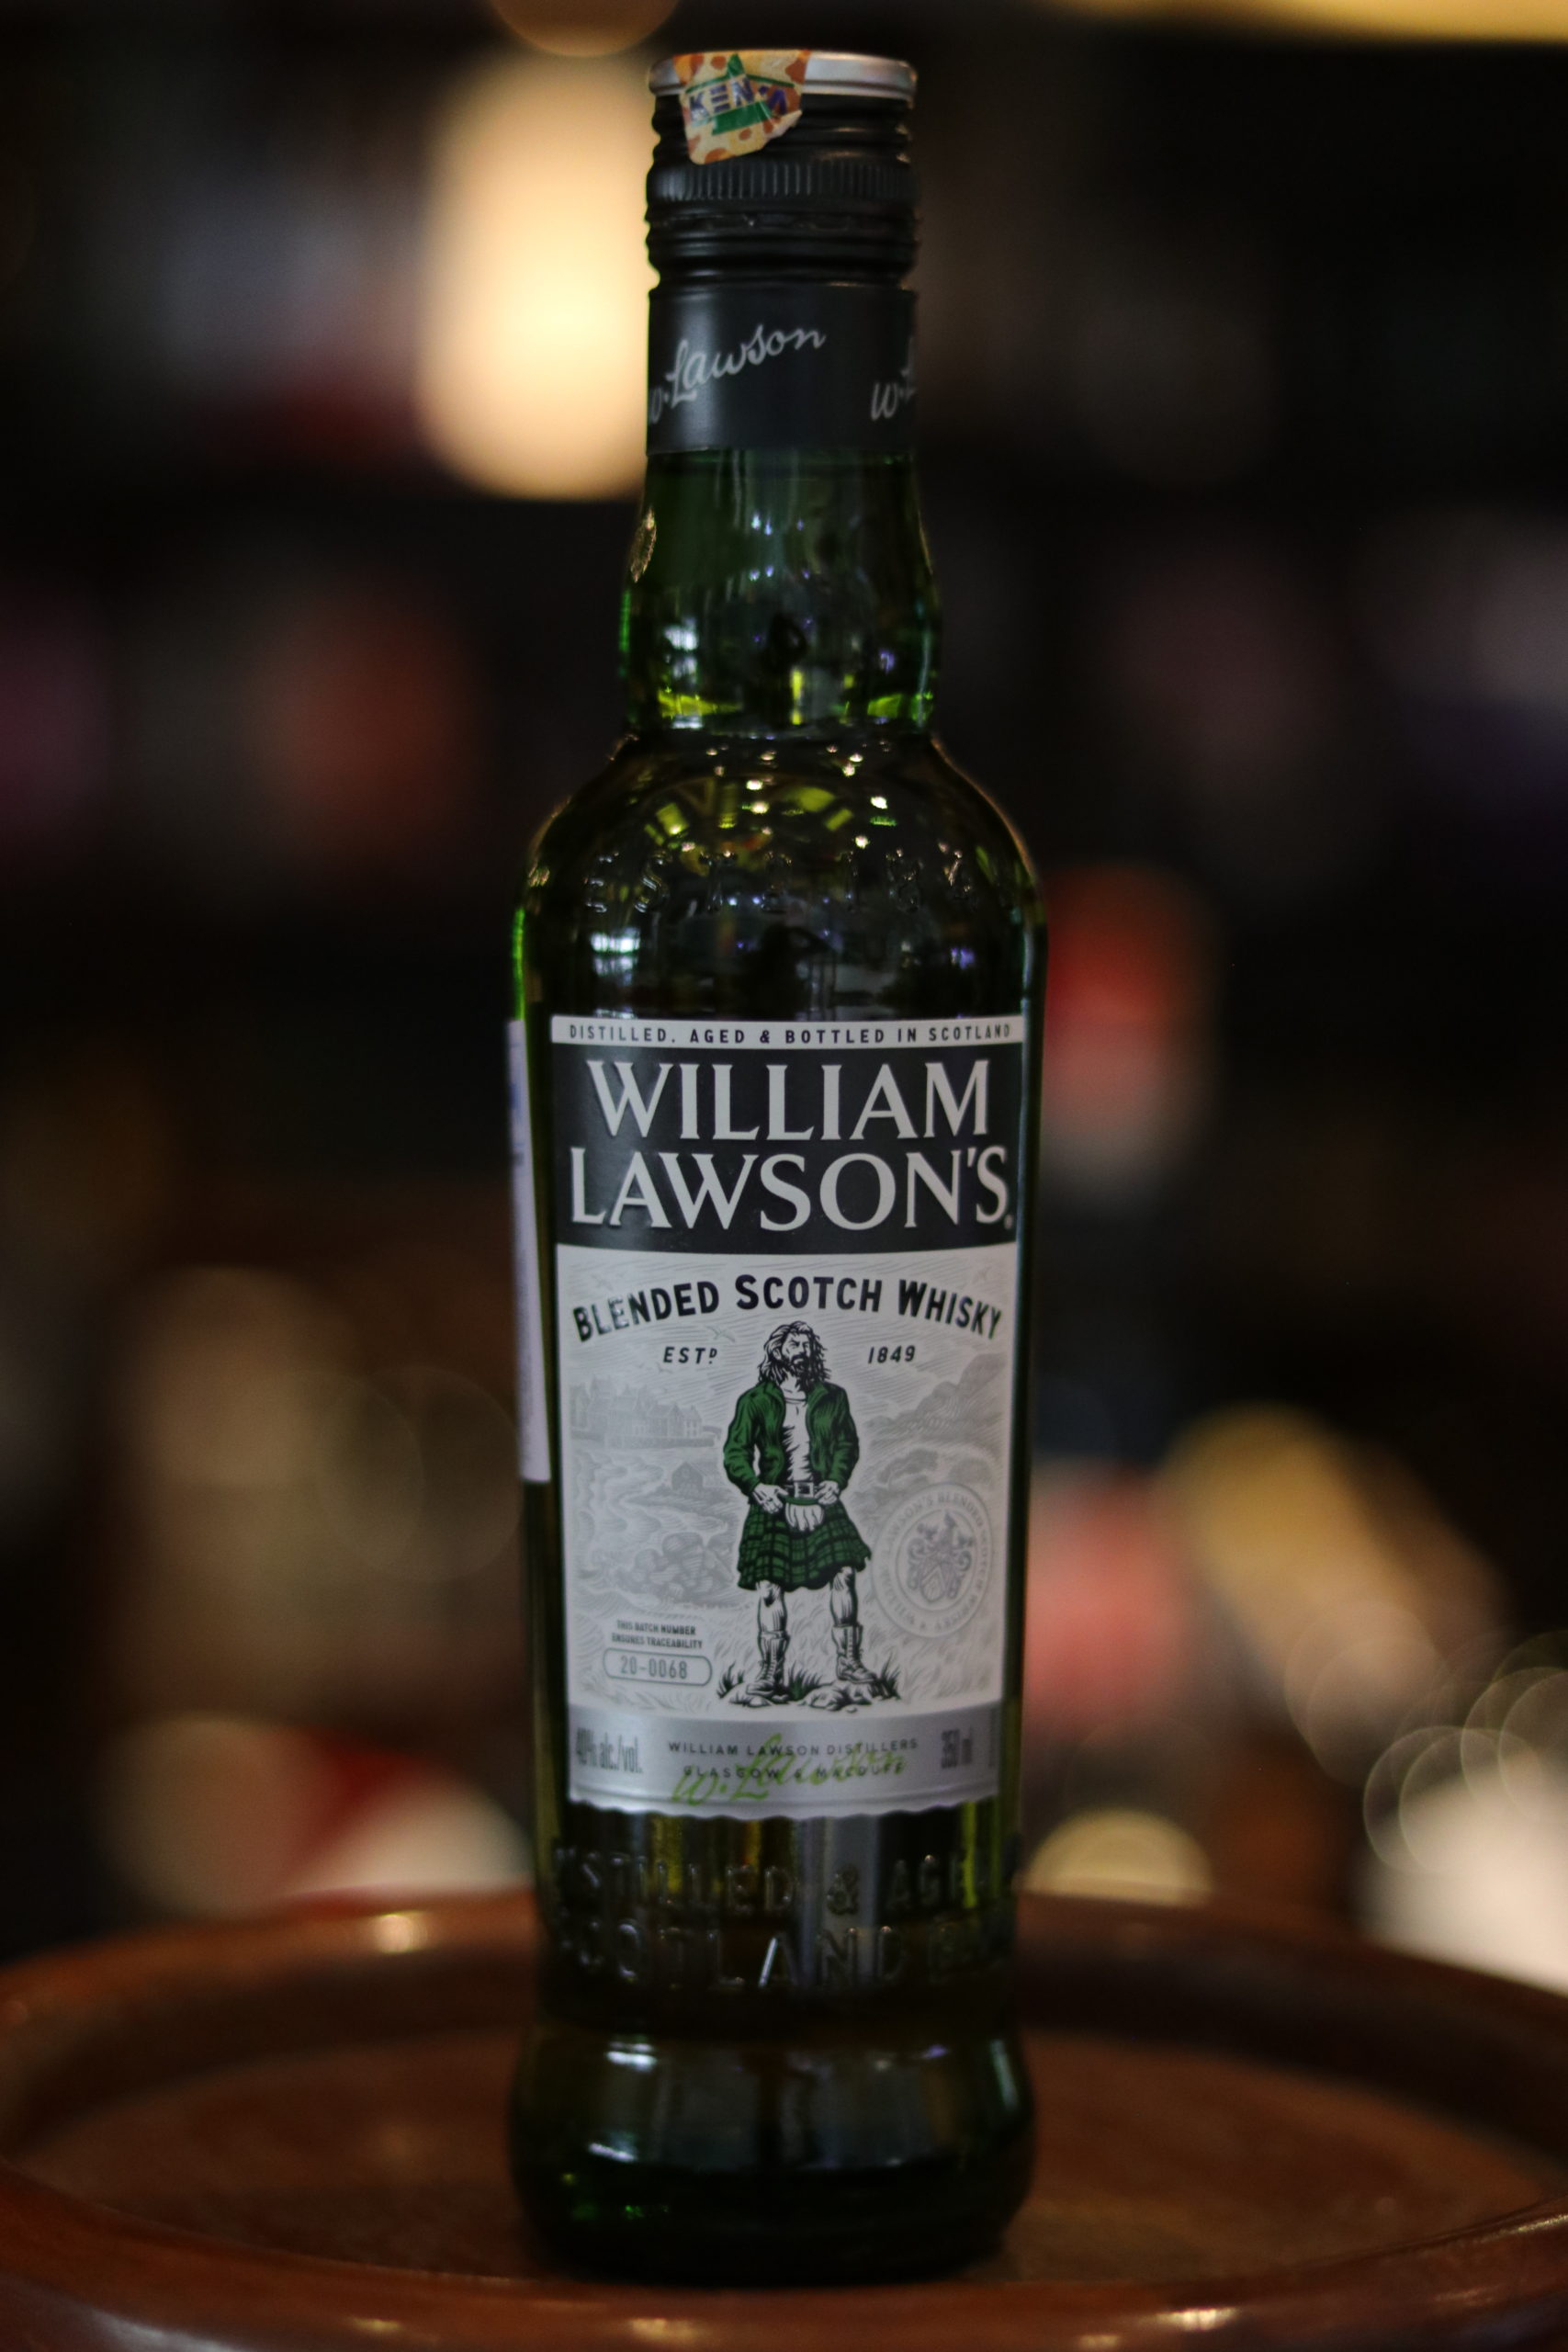 William Lawson's Scotch Whisky